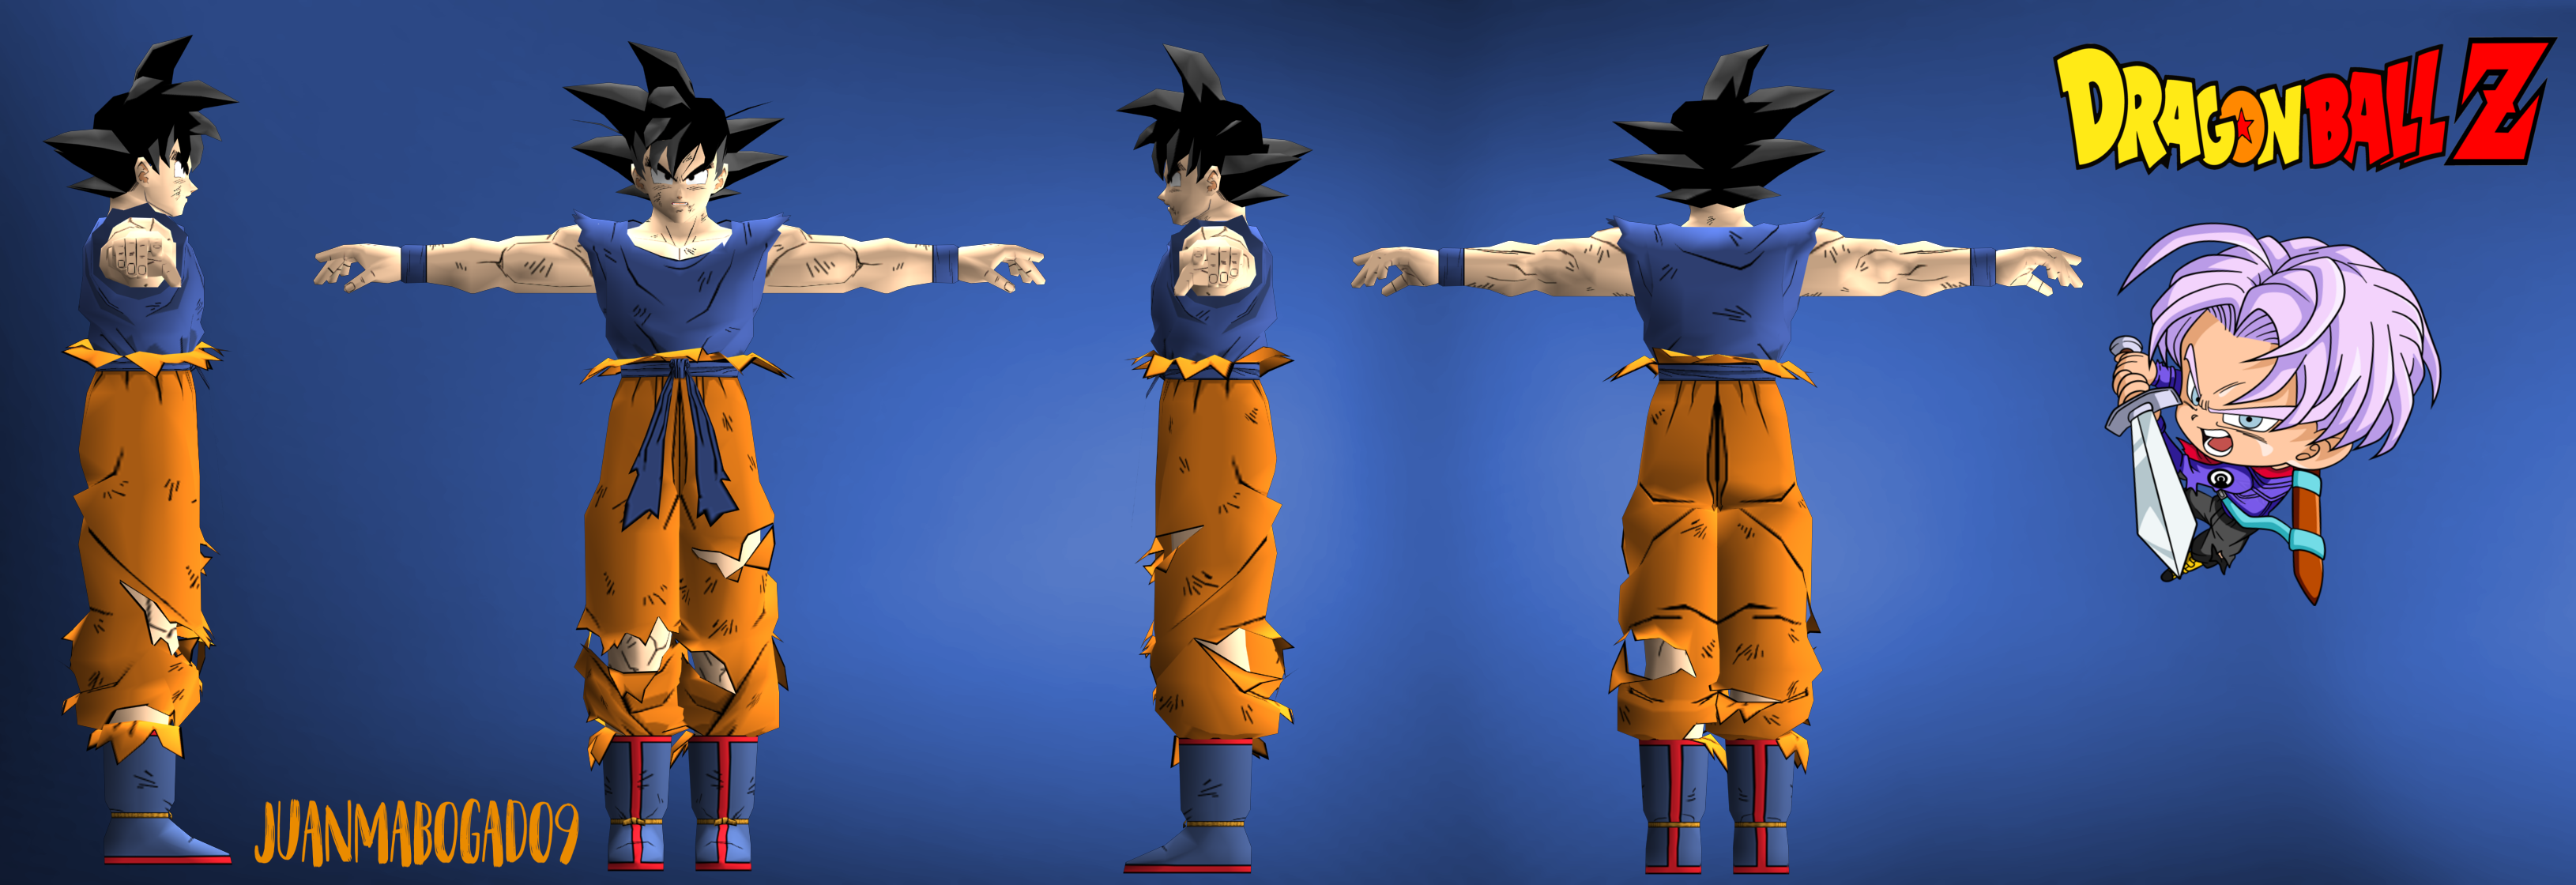 Goku3d Model Dragon Ball Z Budokai 3 By Juanmabogado9 On Deviantart